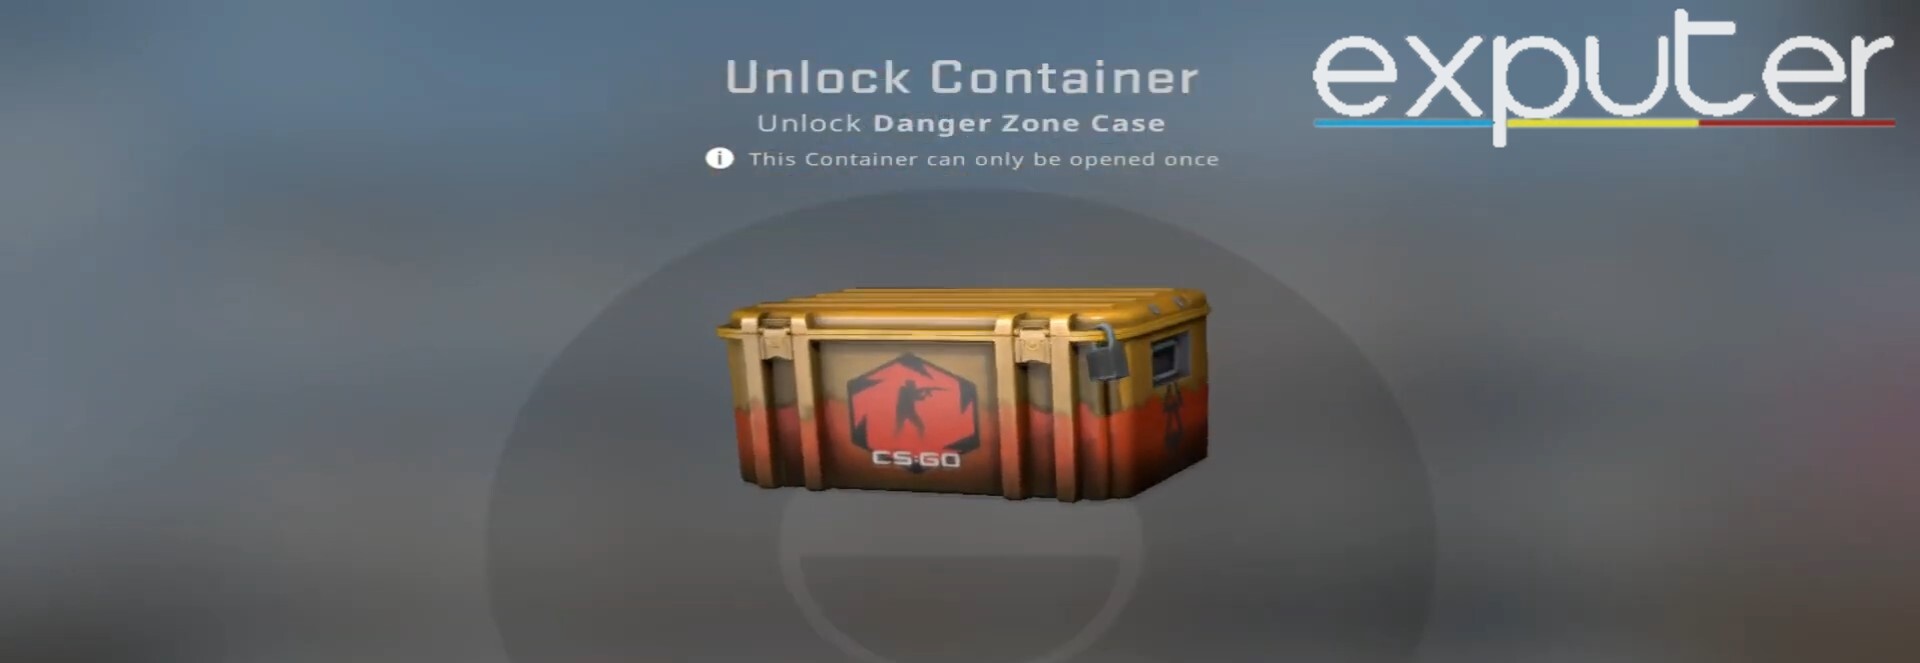 Danger Zone Case